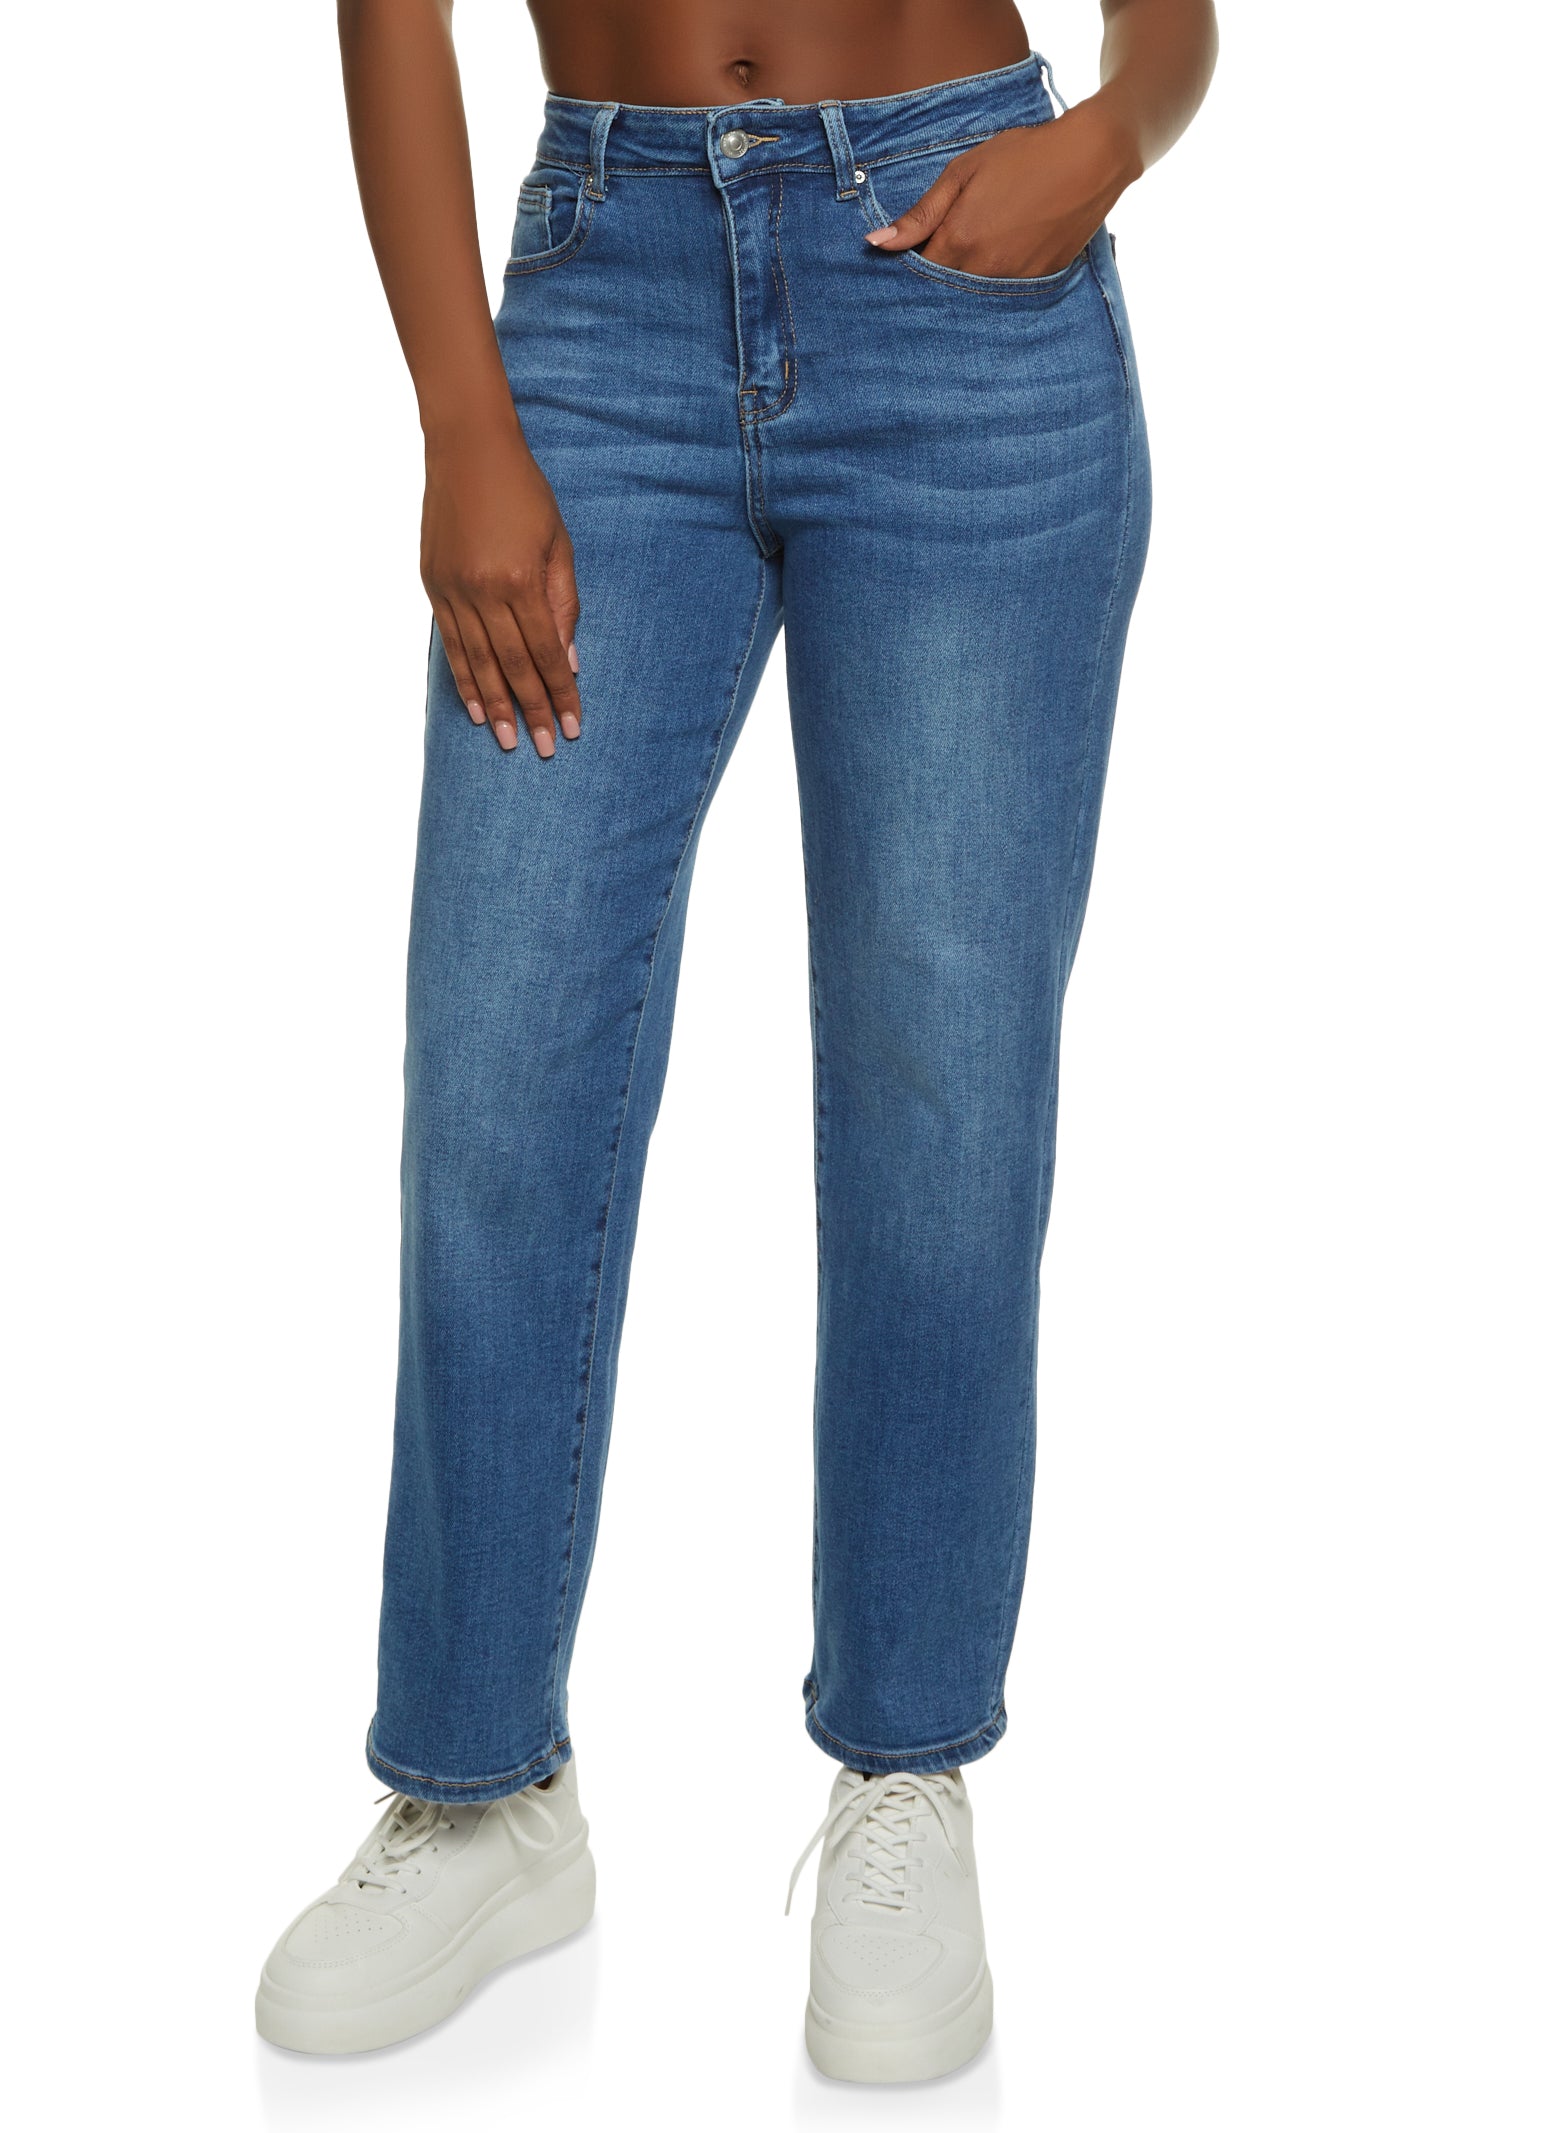 WAX JEAN Women's PREMIUM Womens Stretch Solid Casual Skinny TWILL Cargo  Pants (Wax Jeans 90010)